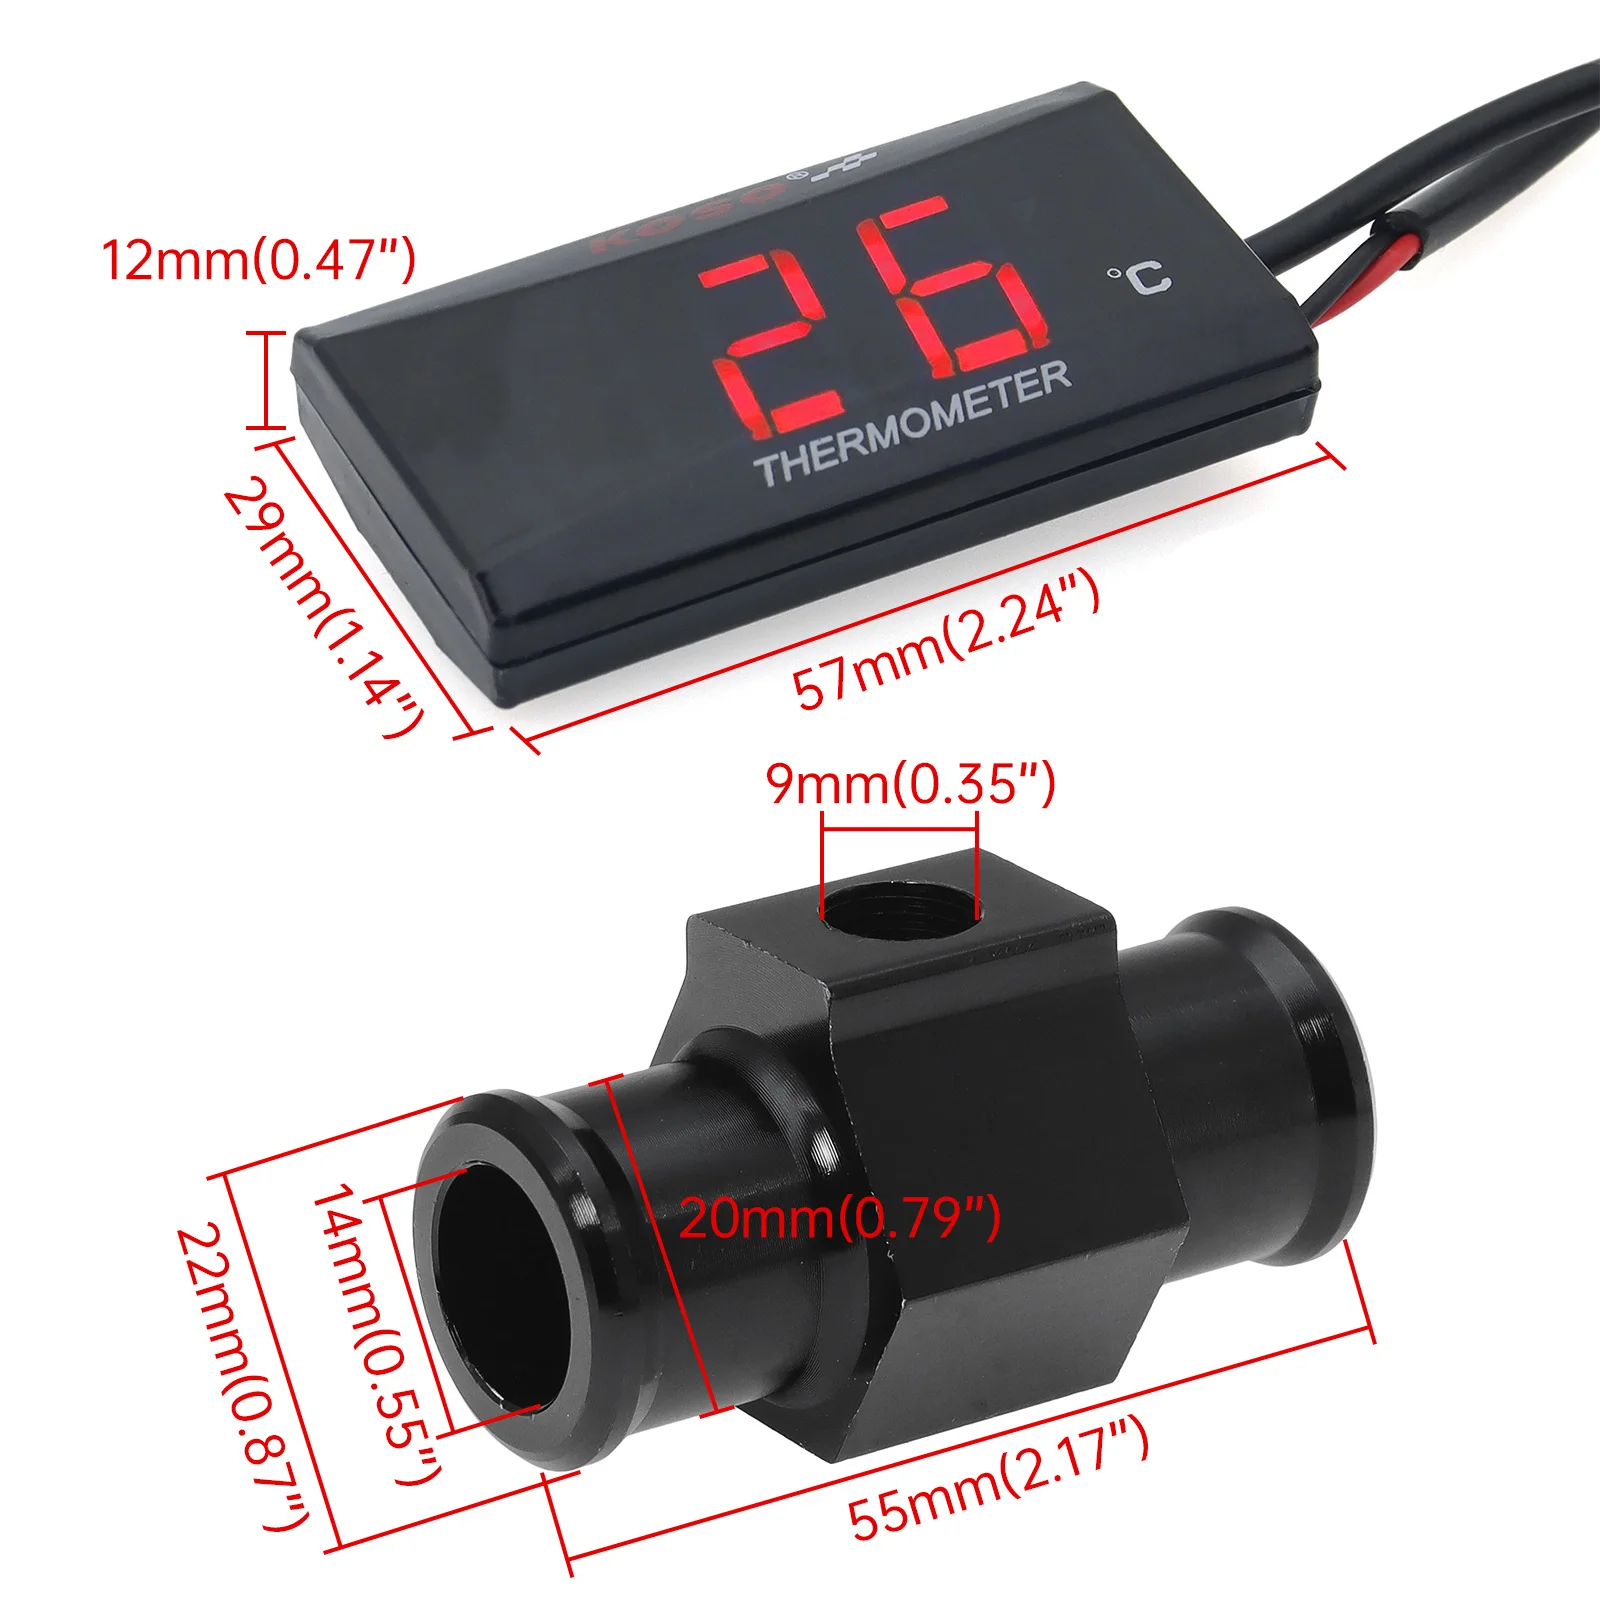 MiniTemp Portable Thermometer, Screen Printing Supplies